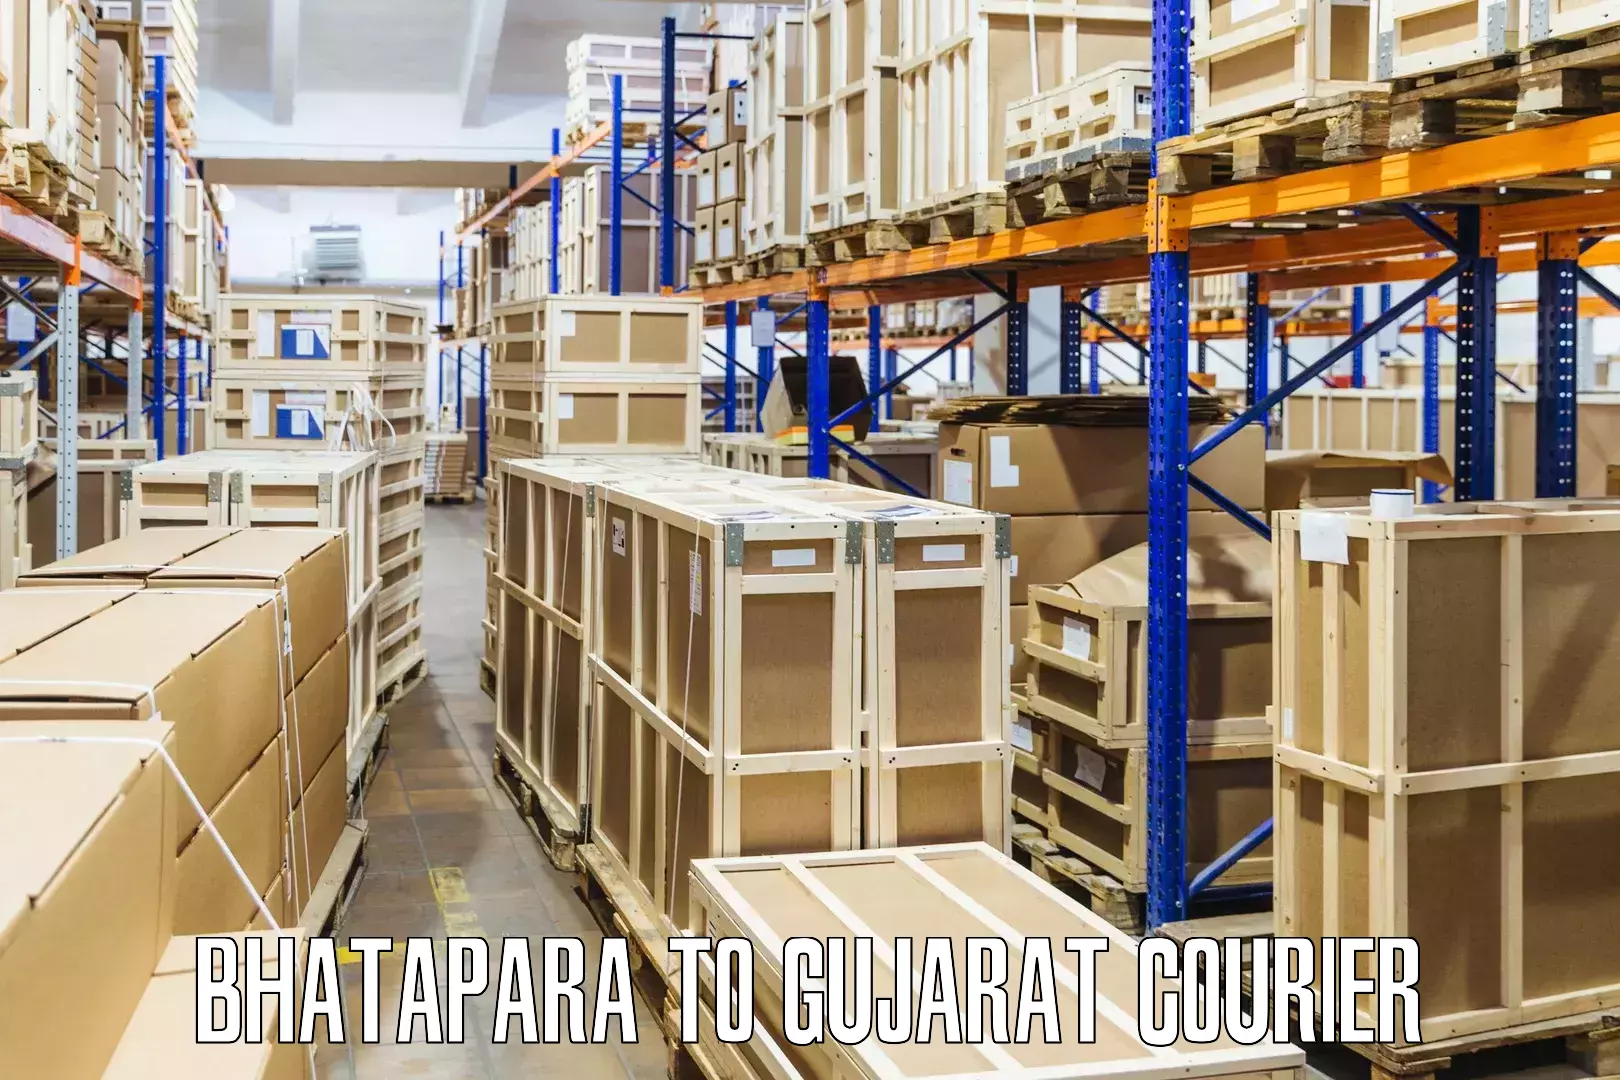 Shipping and handling Bhatapara to Bodeli